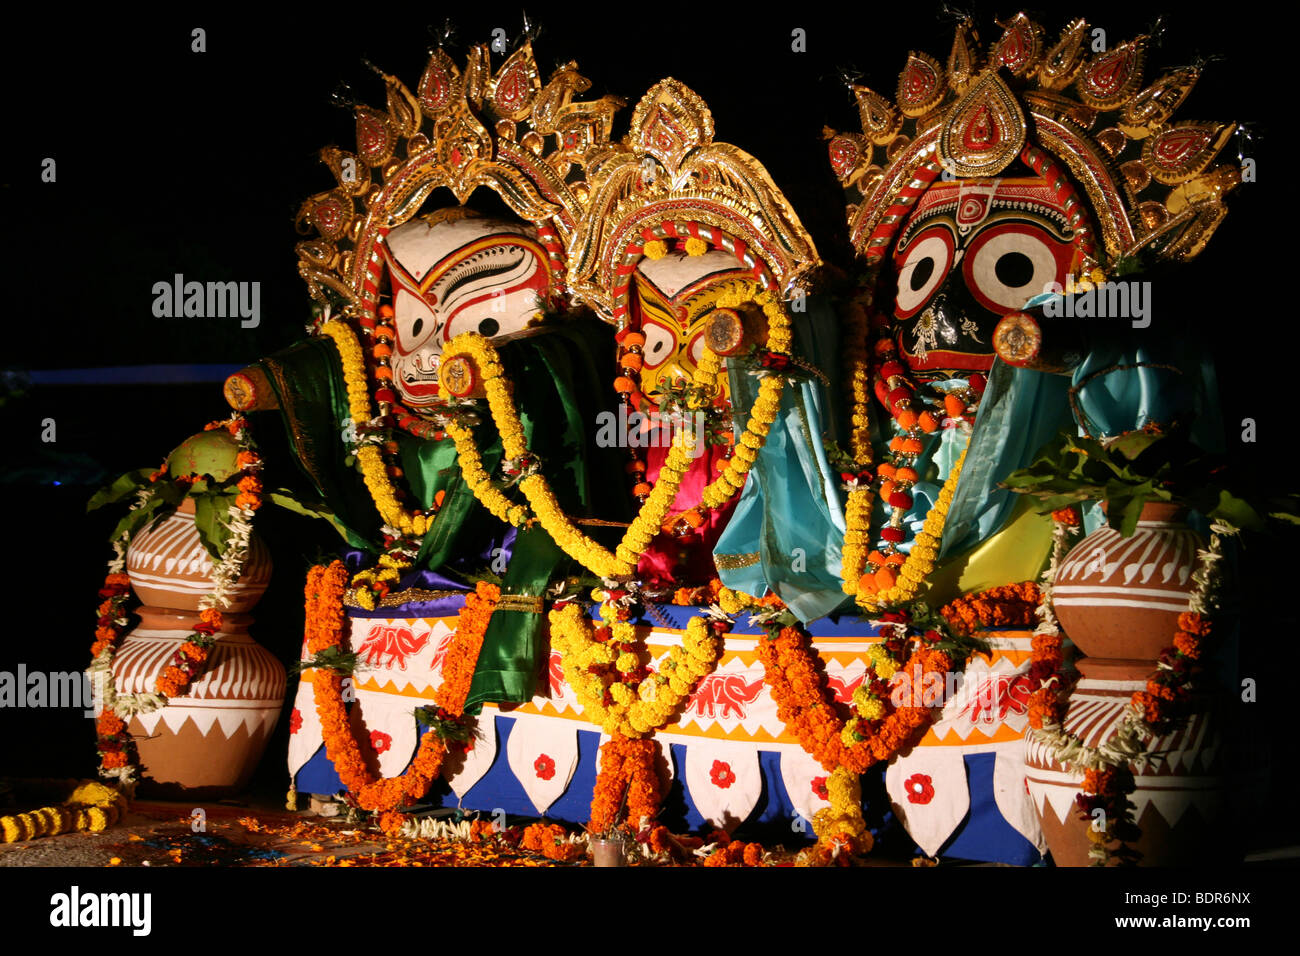 Hindu Deities Lord Jagannath With Brother Balabhadra And Sister Subhadra At The Konark Dance Festival, Orissa, India Stock Photo